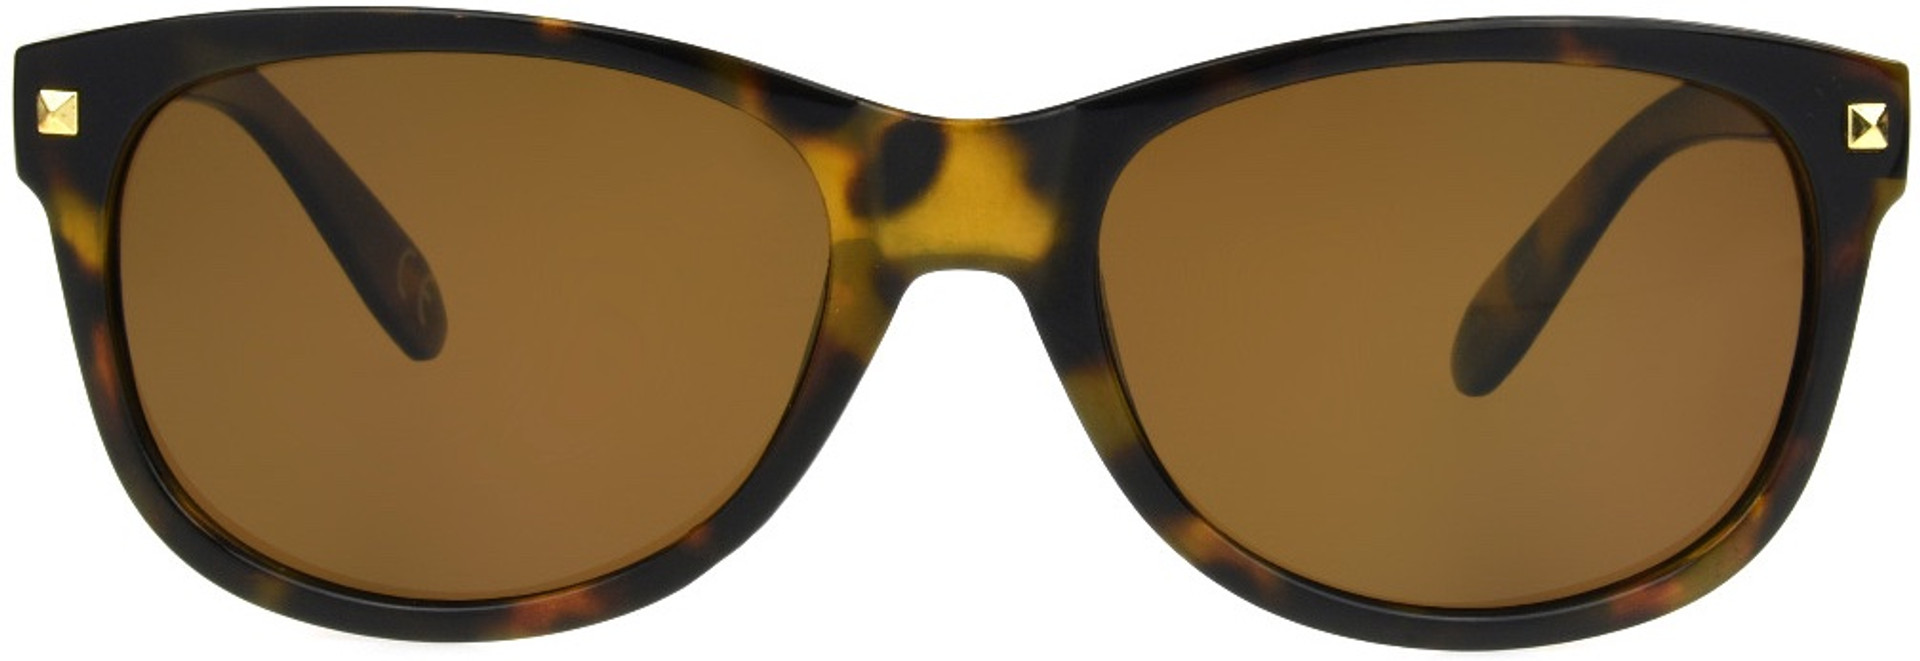 Sutton POL | Women's Sunglasses